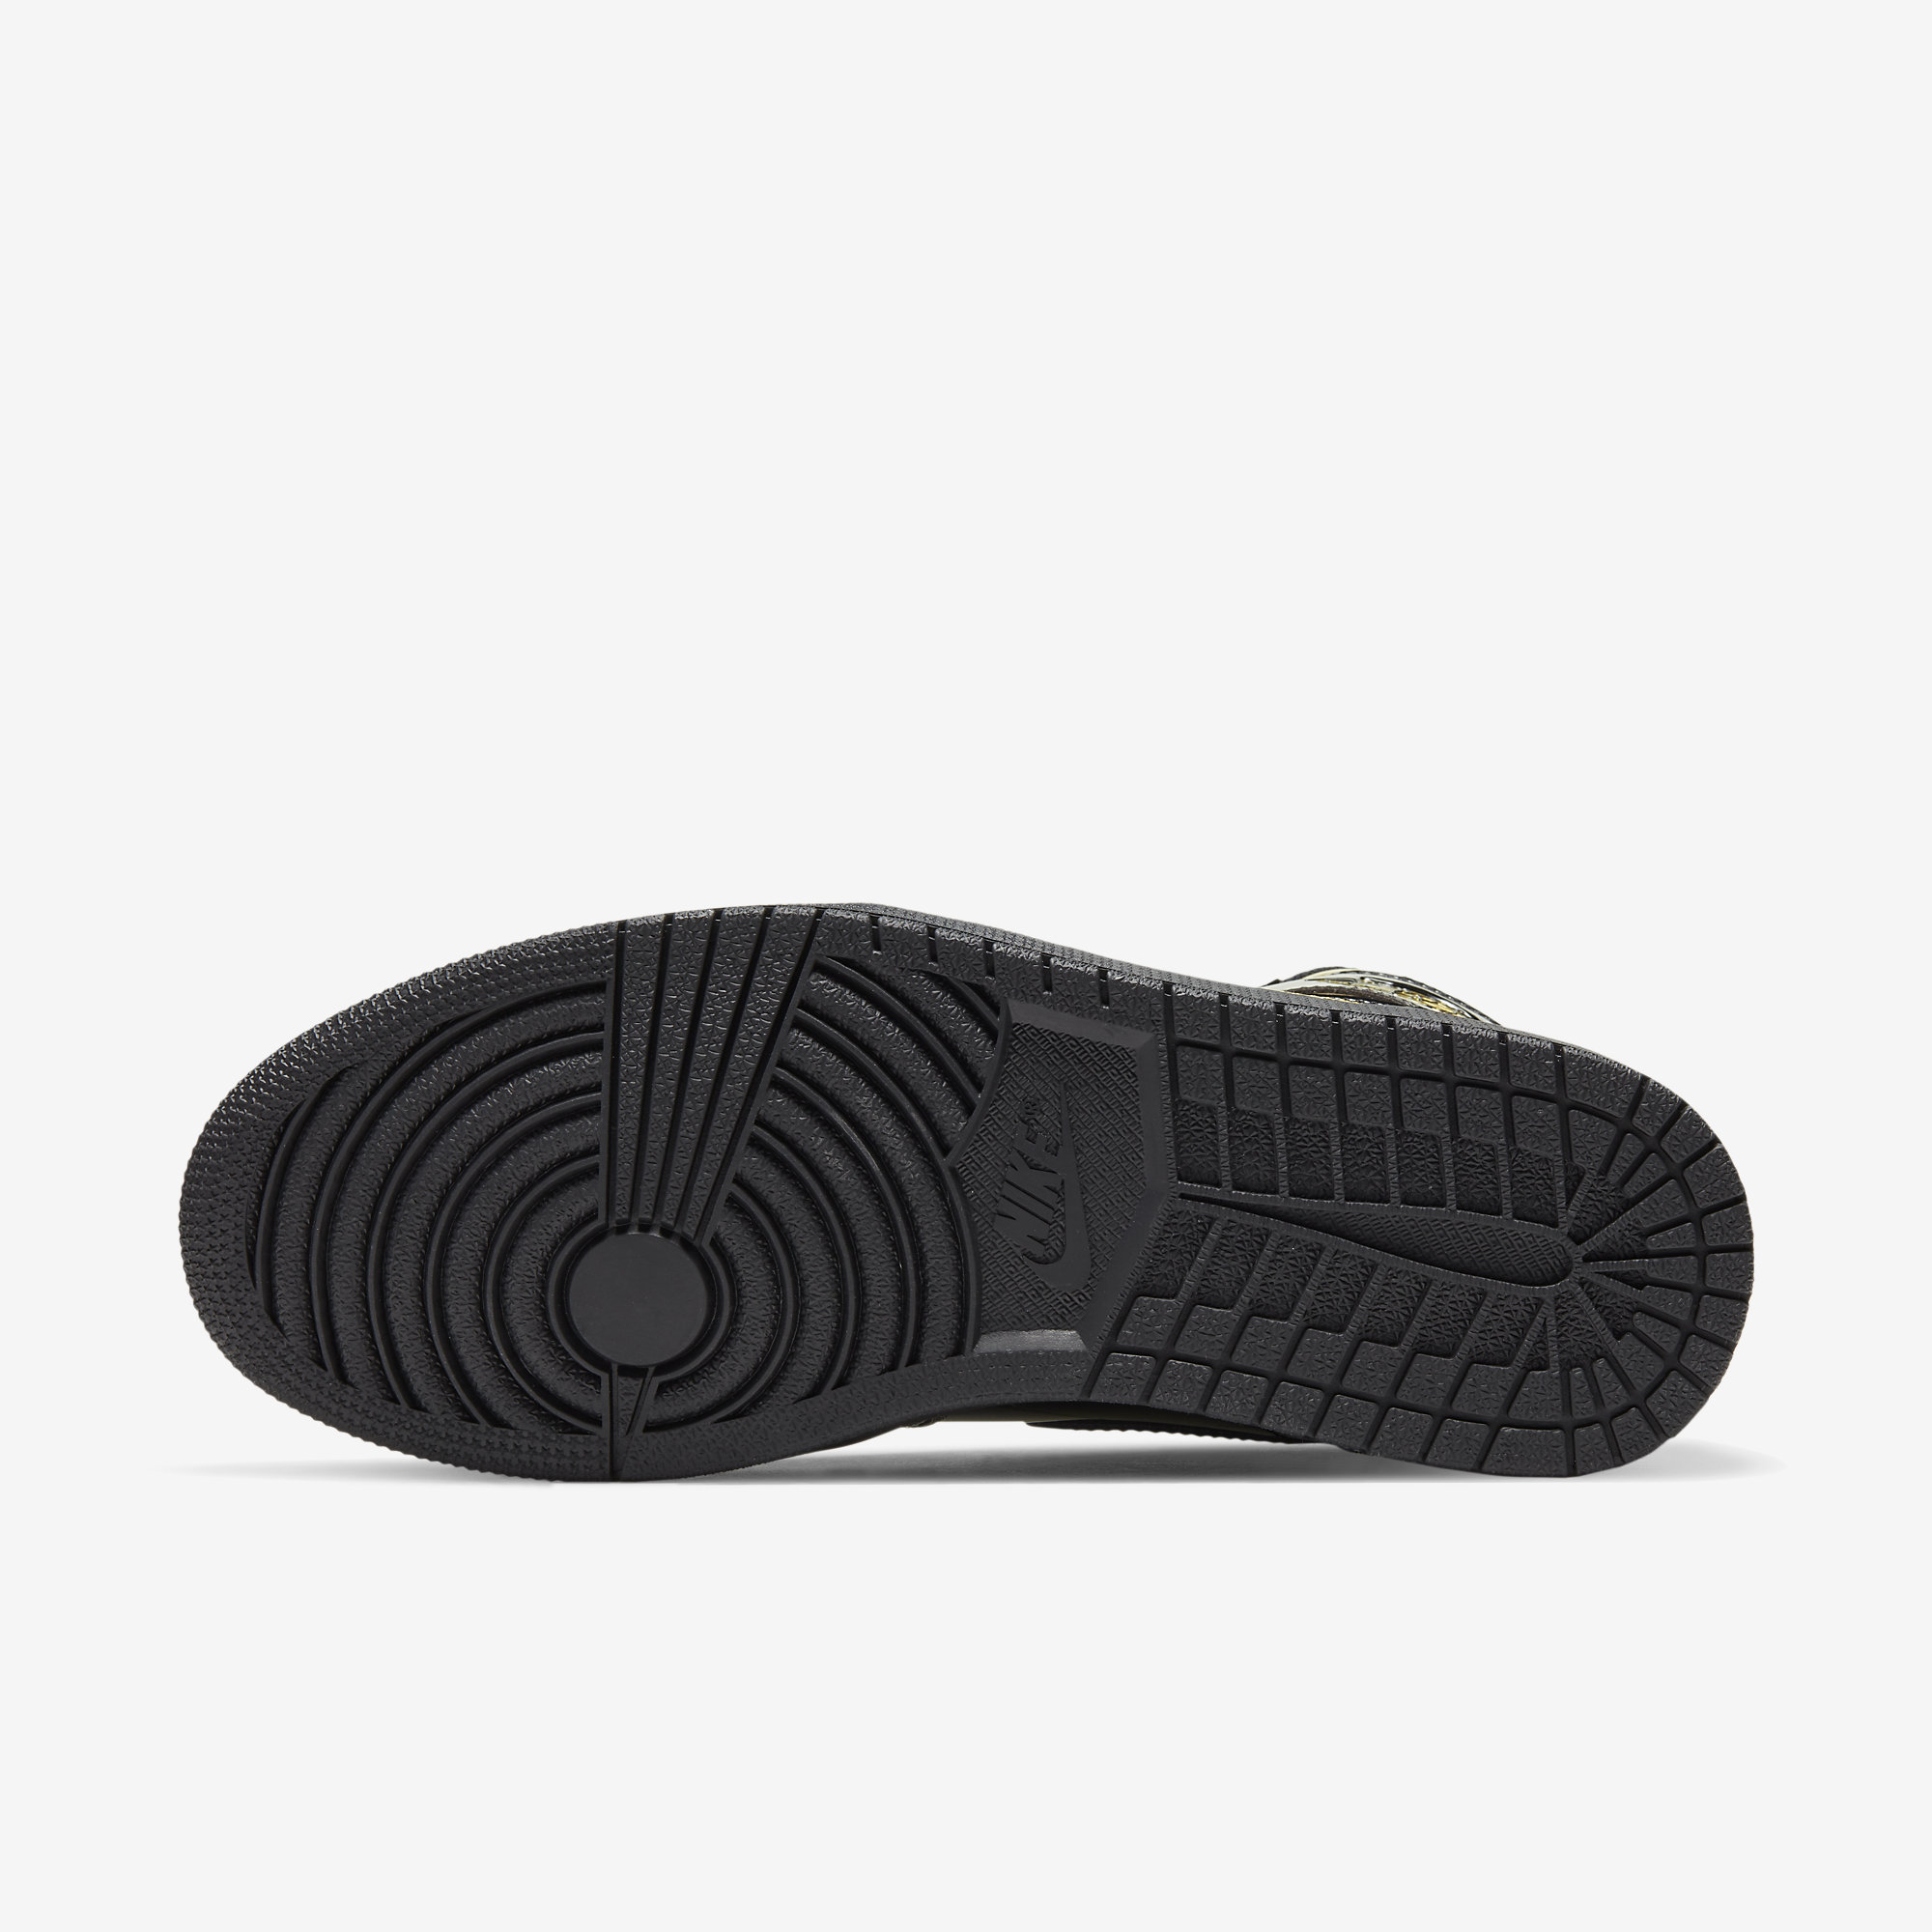 Nike Sneakers, Jordan 1 Retro High ‘Black Metallic Gold’ (2020)